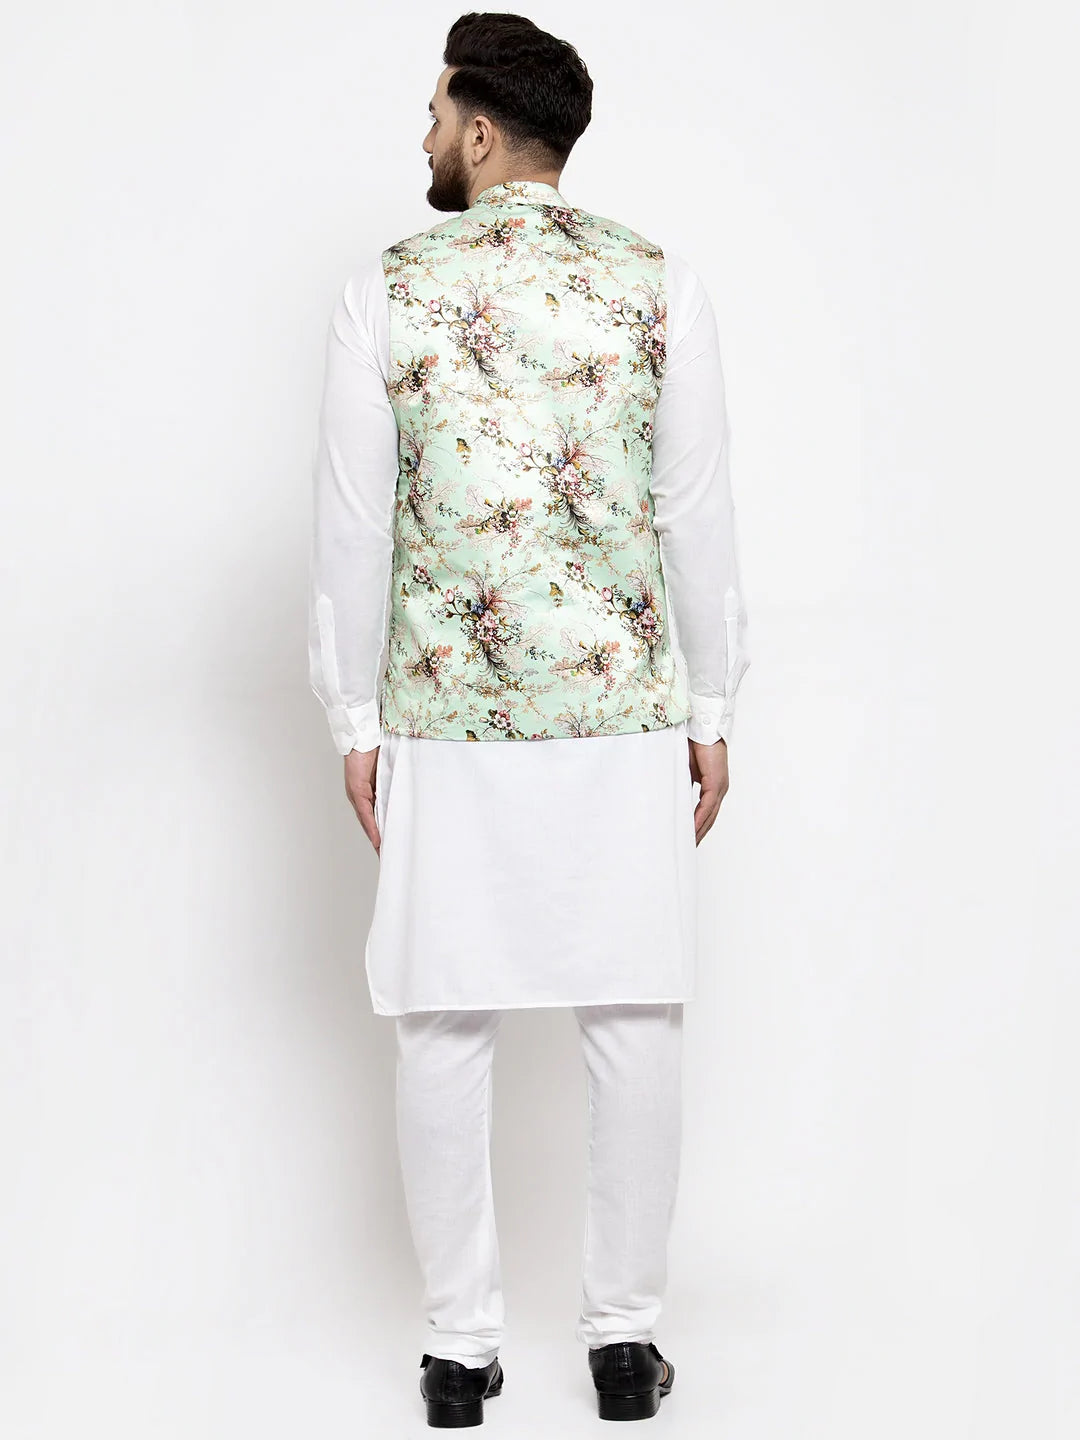 Jompers Men's Solid Cotton Kurta Pajama with Printed Waistcoat ( JOKP WC 4058 Lime-W )